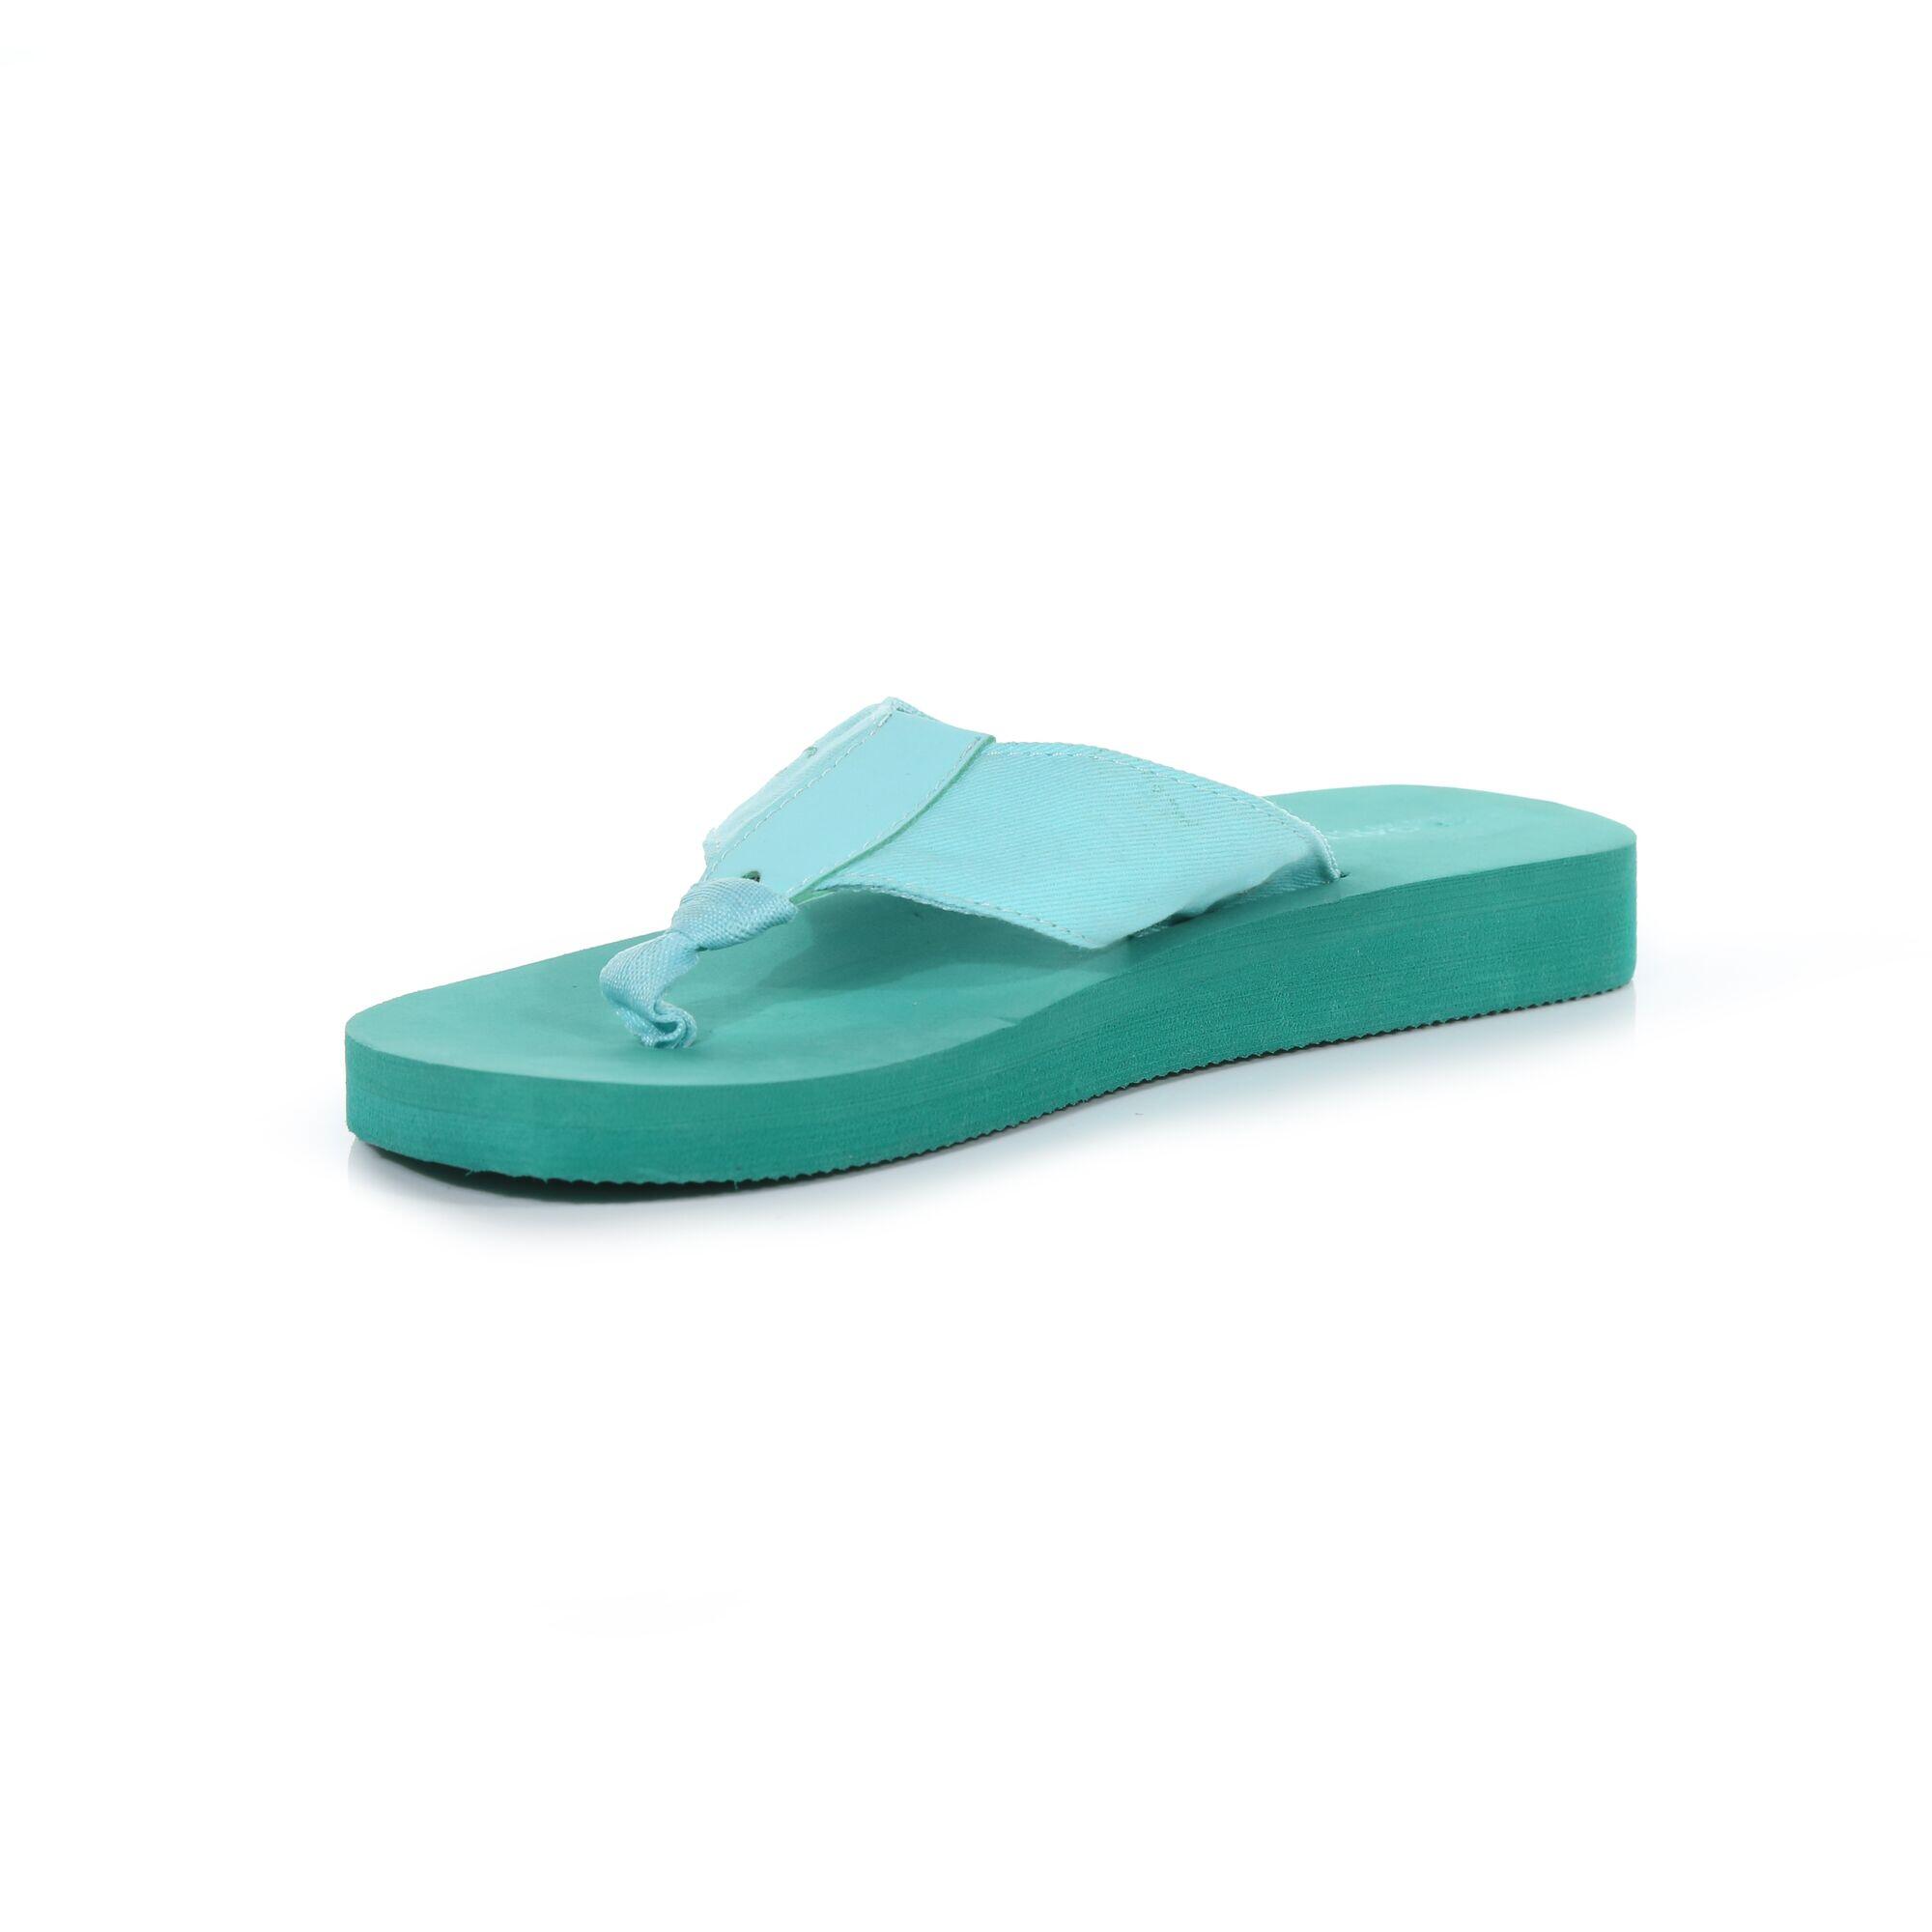 Lady Catarina Women's Poolside Flip Flops - Turquoise Green 4/5